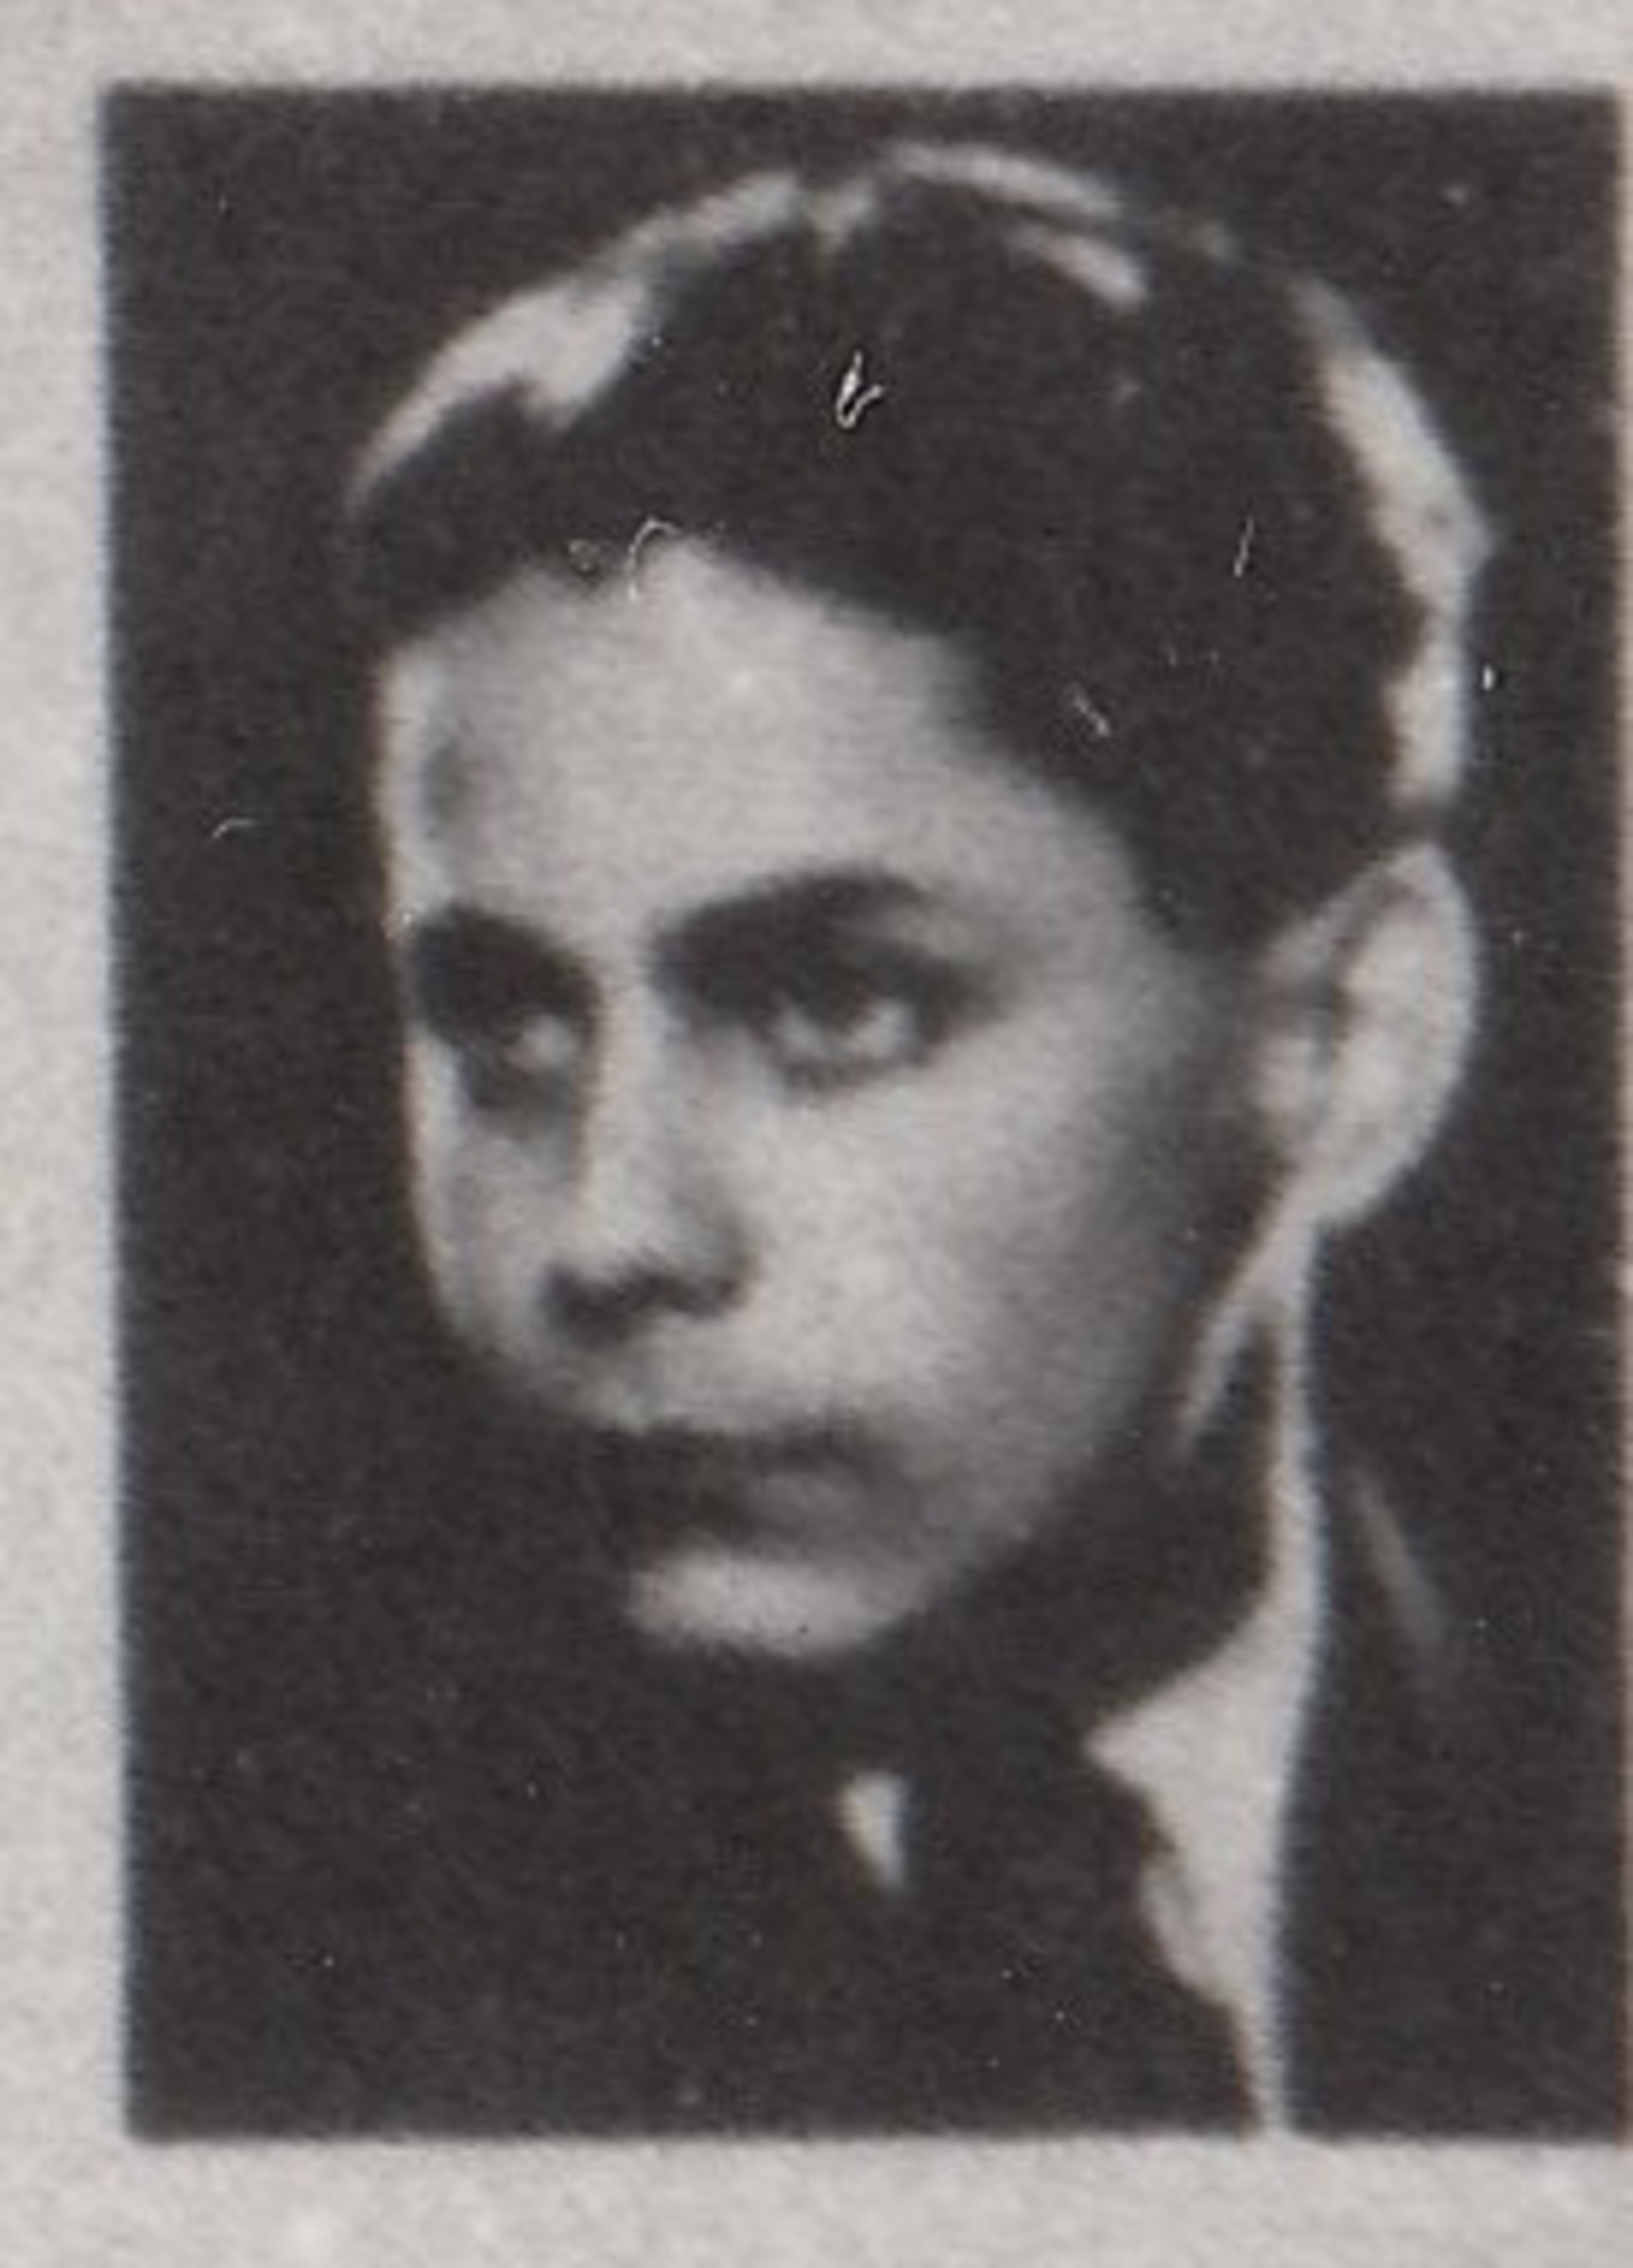 Dov Eisdorfer na maturitní fotografii, 1939